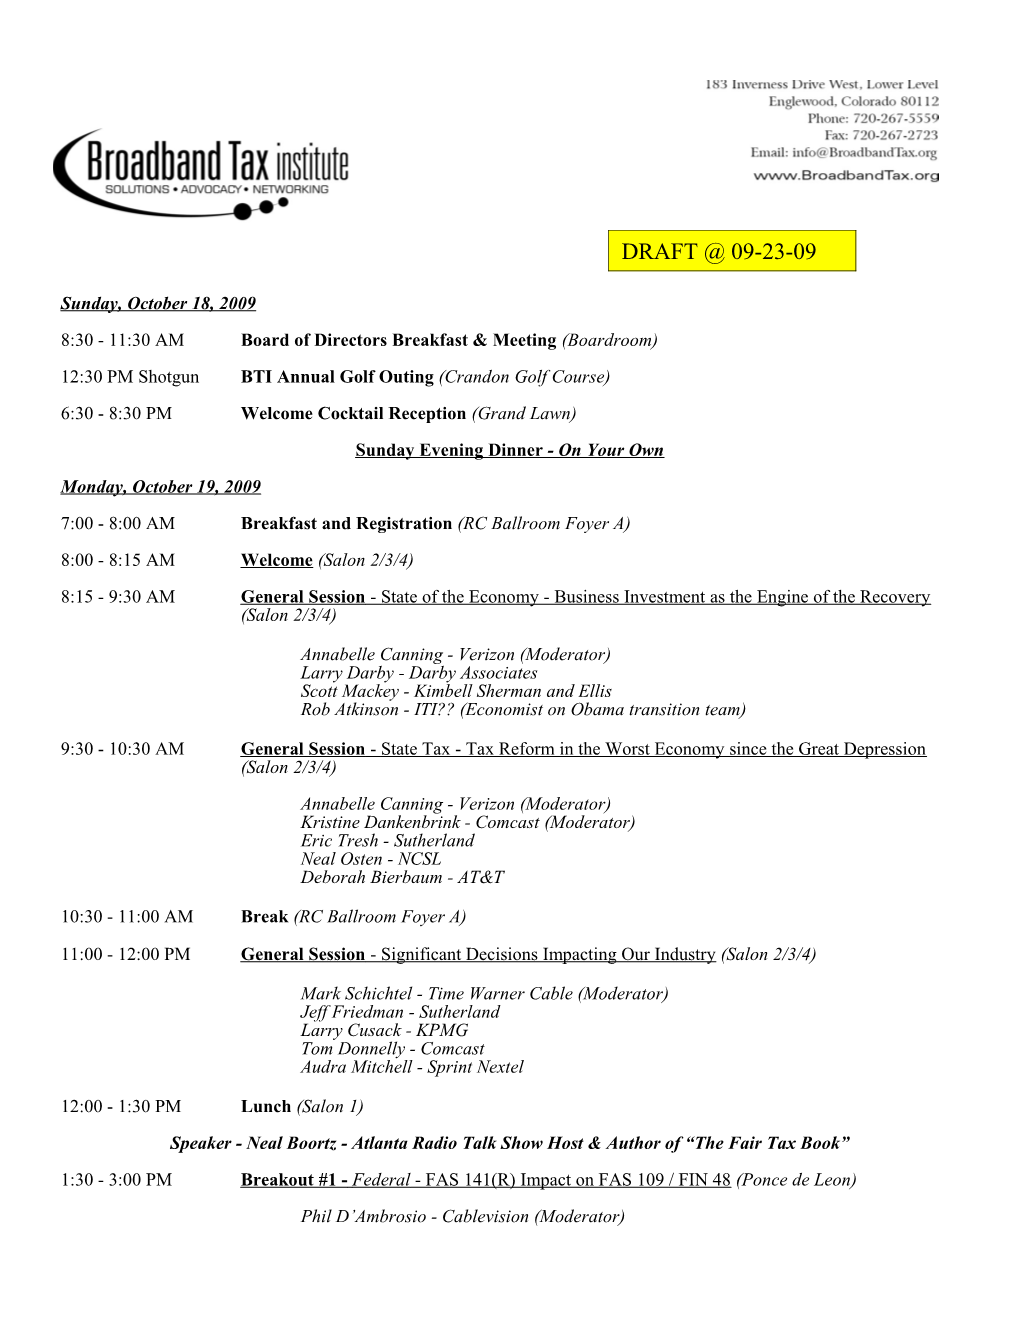 2009 Broadband Tax Institute (BTI) Conference Agenda